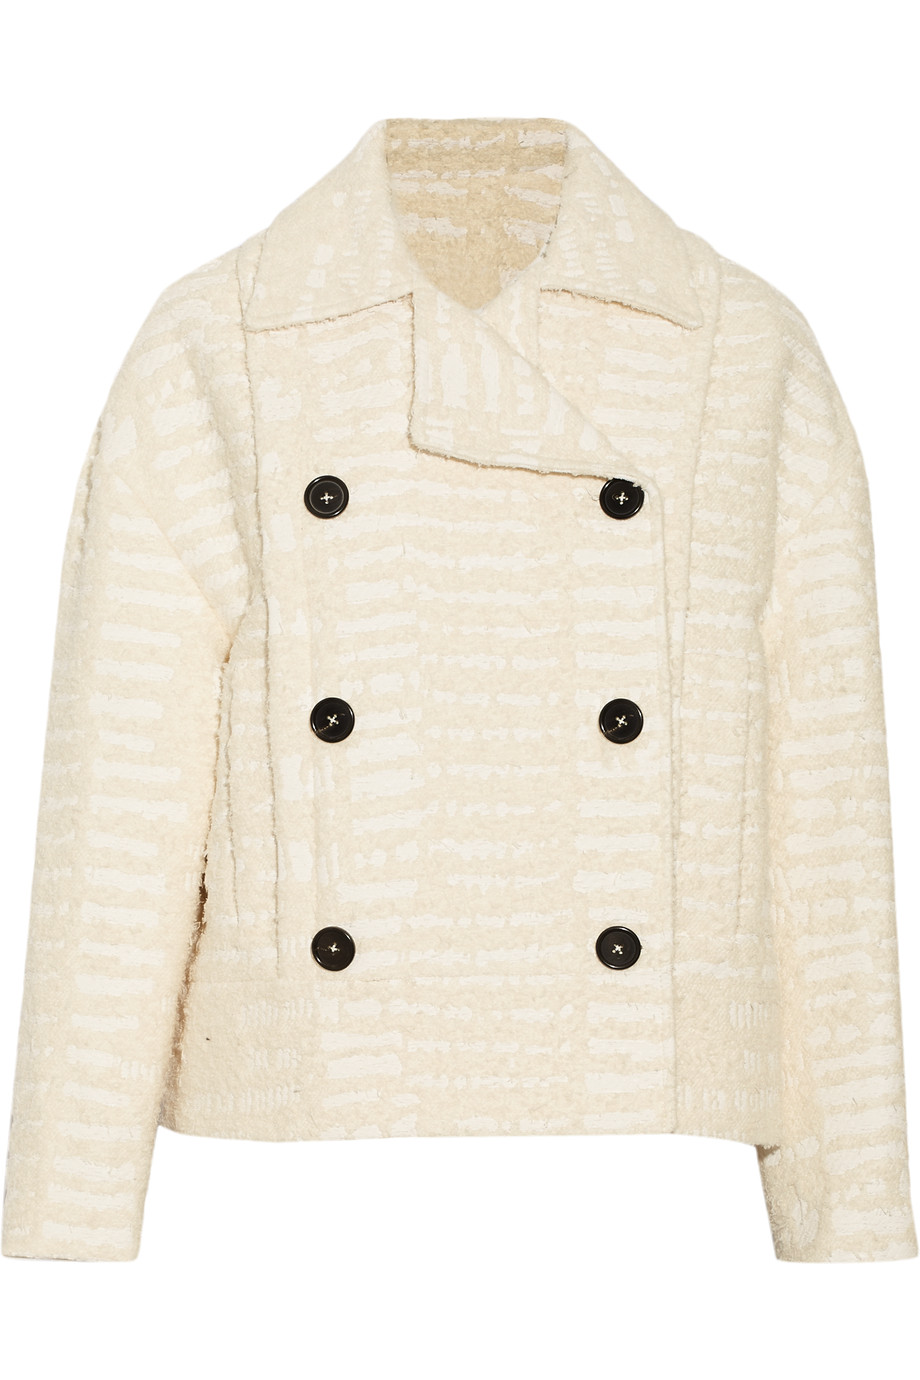 Proenza Schouler Cotton Blend Bouclé Tweed Jacket